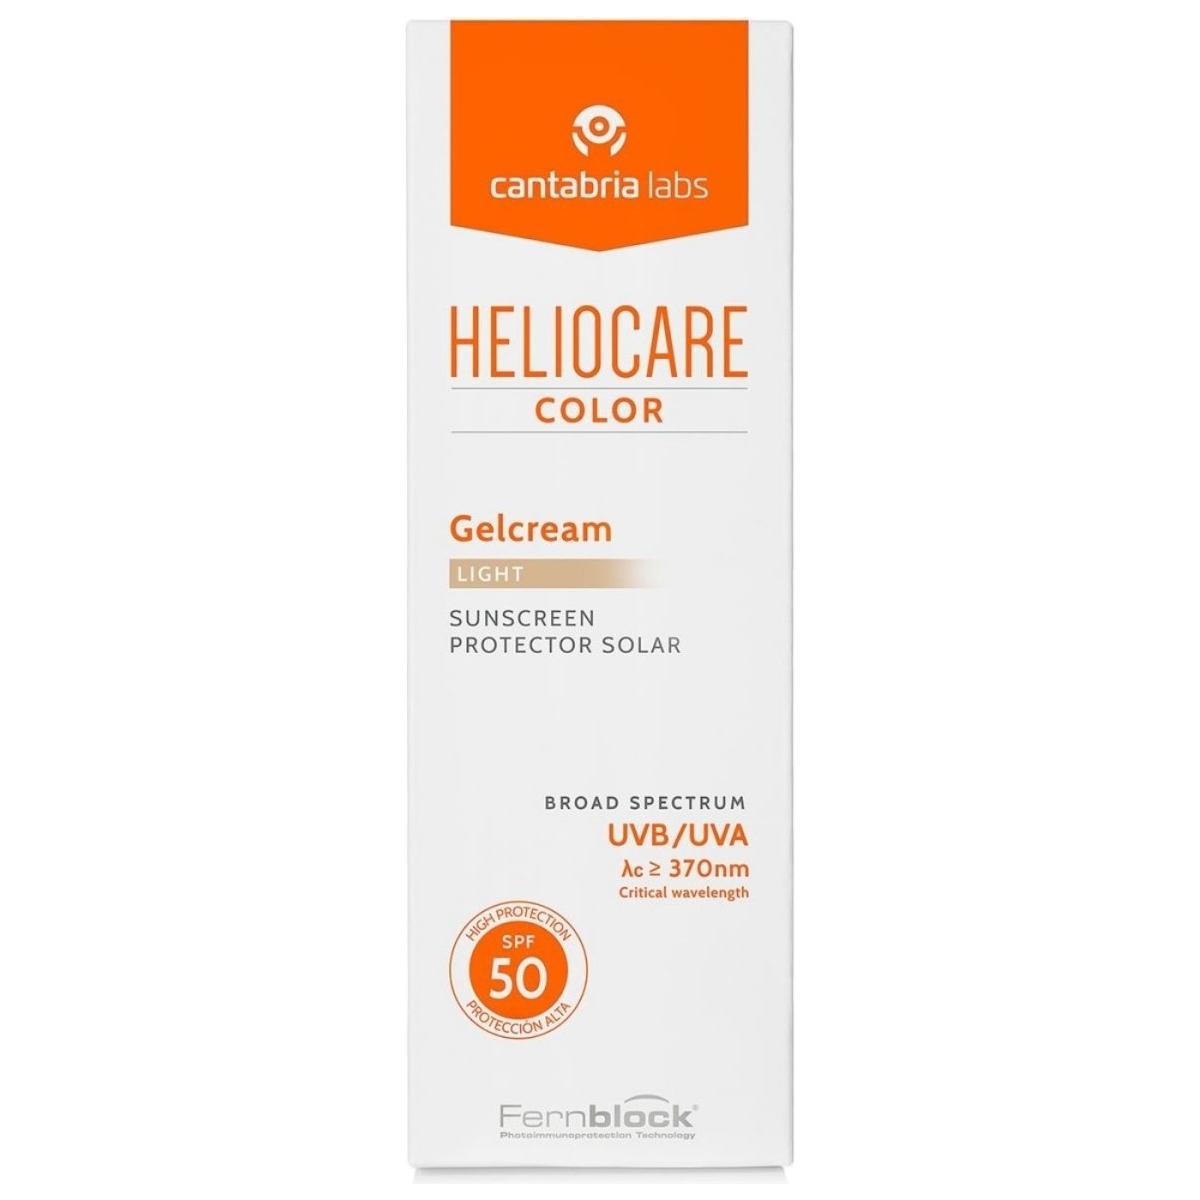 Heliocare | Color Gelcream Light SPF50 - DG International Ventures Limited